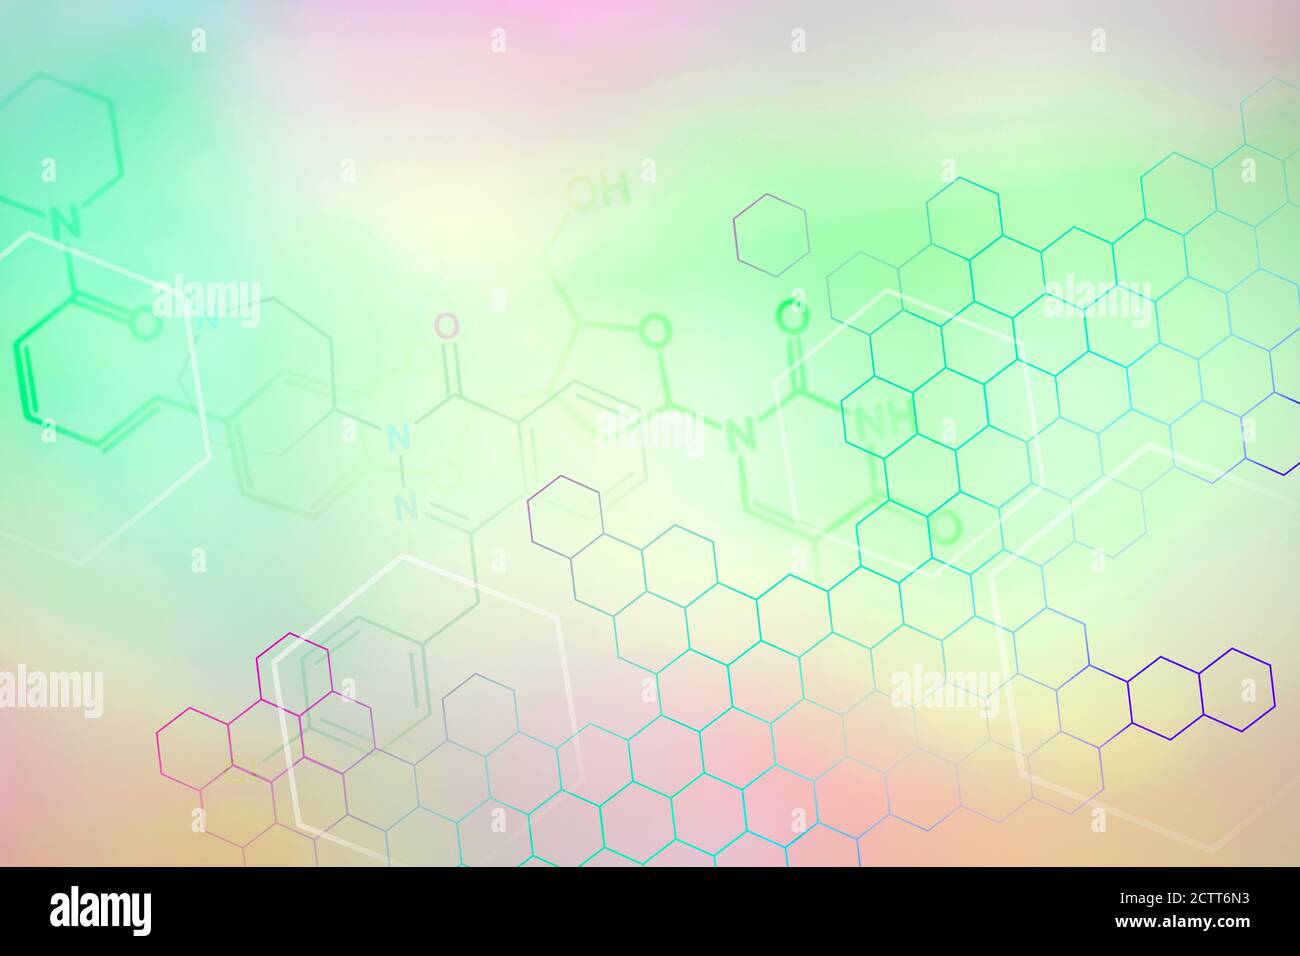 Chemical symbols on pastel colored background Stock Photo